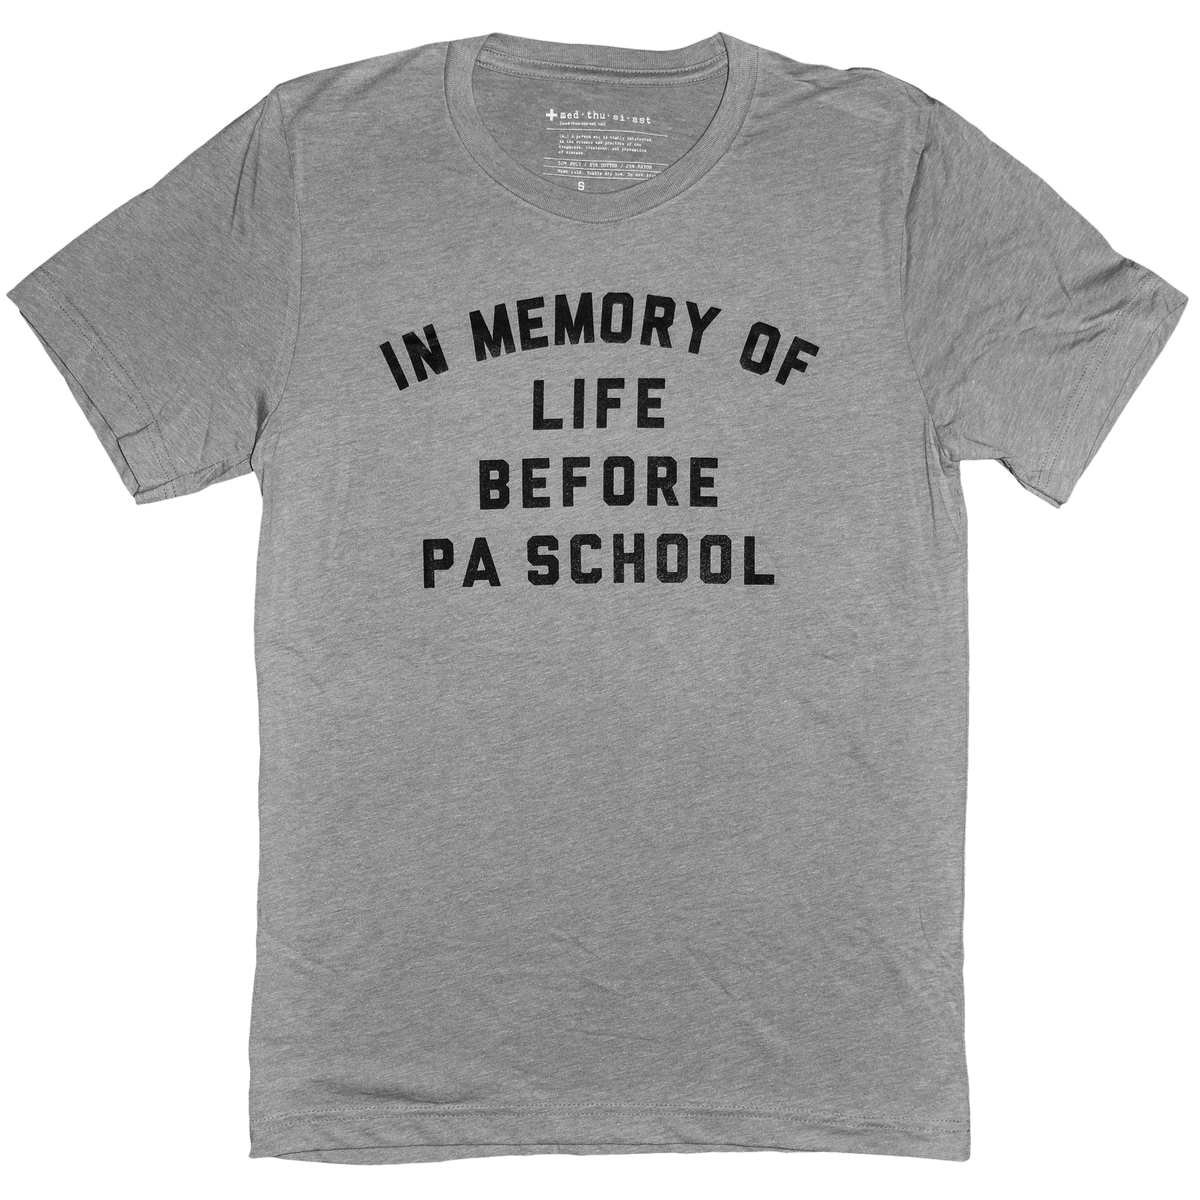 In Memory of Life Before PA School Tee